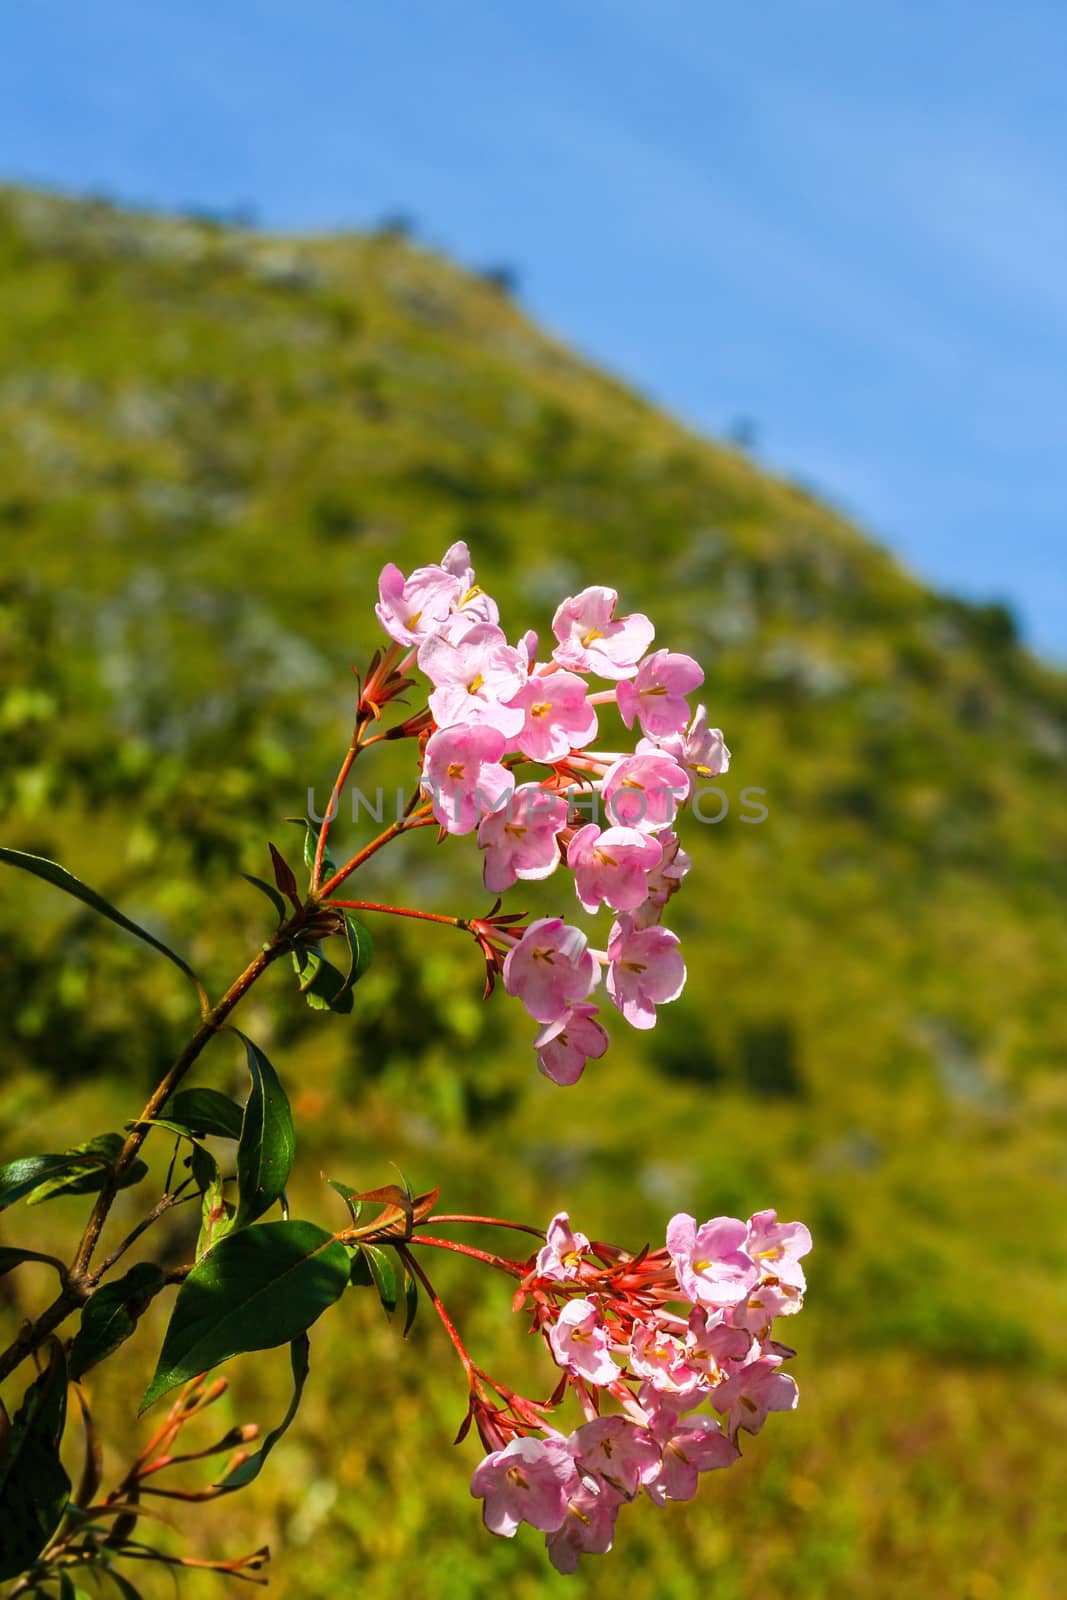 The wildflowers scientific name "Pedicularis siamensis" found gr by ngungfoto